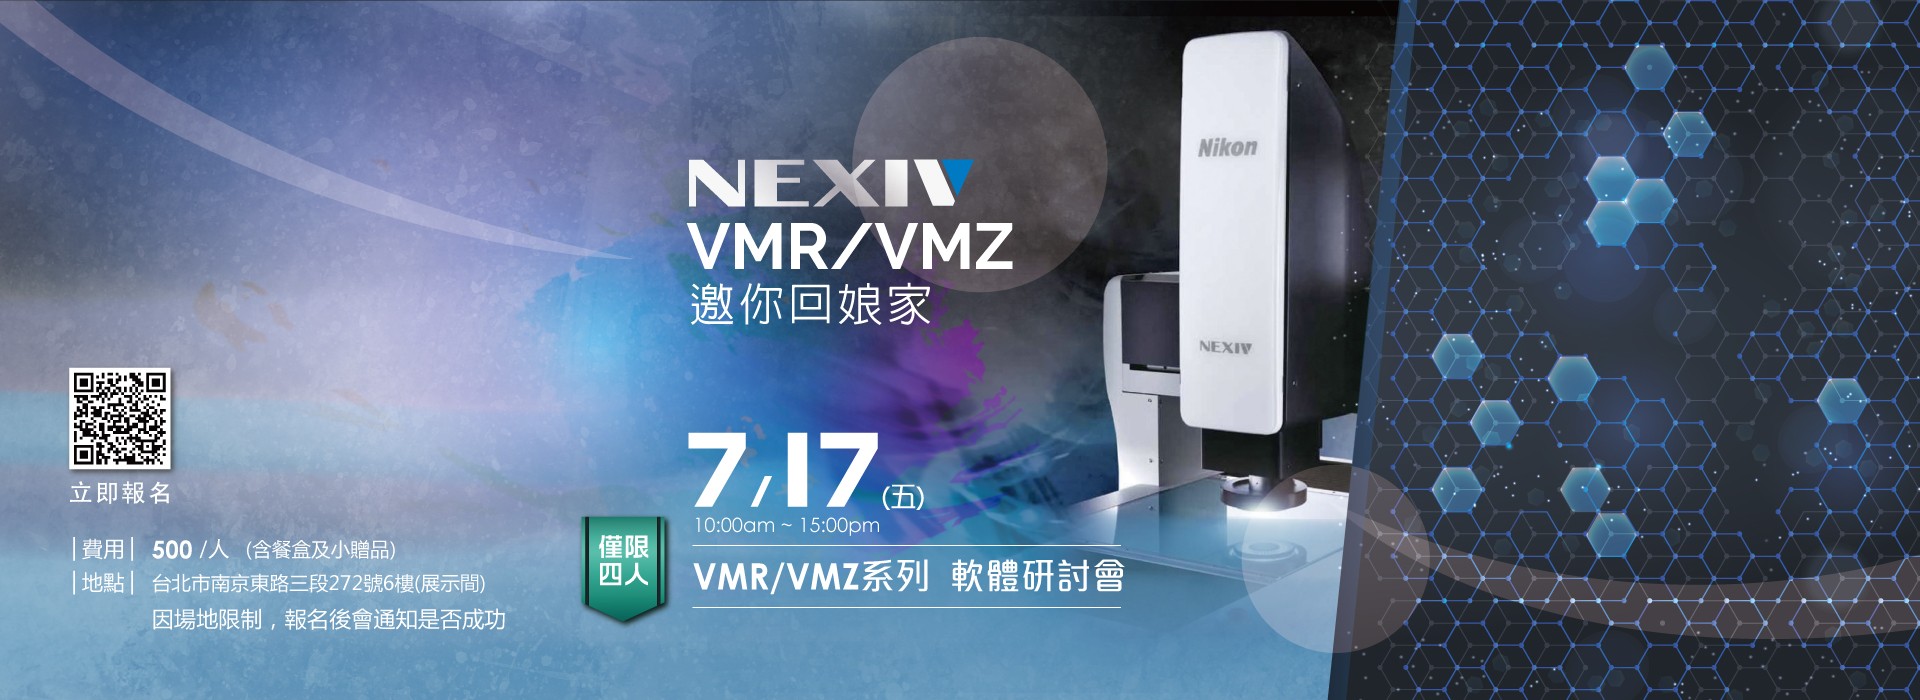 202007_VMZ_研討會_FB_1920X700.jpg - Nikon NEXIV VMR/VMZ回娘家 VM系列初階軟體研討會